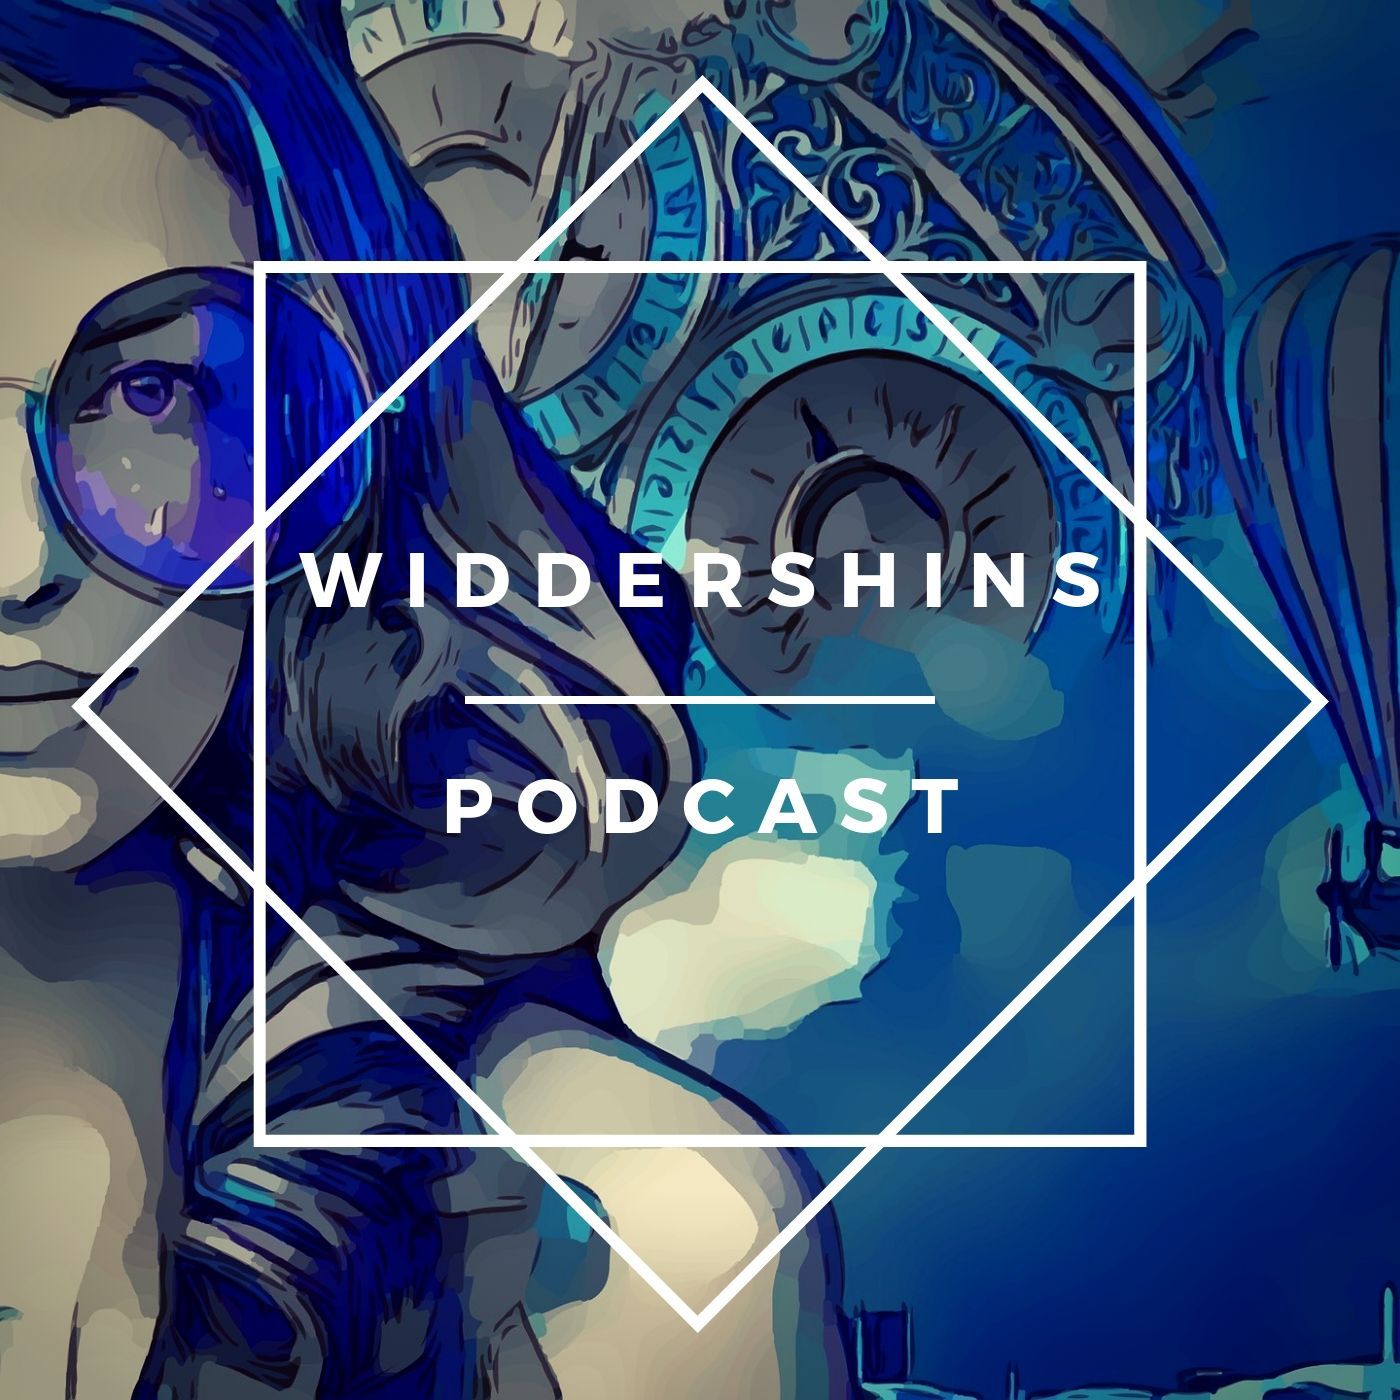 Widdershins Podcast